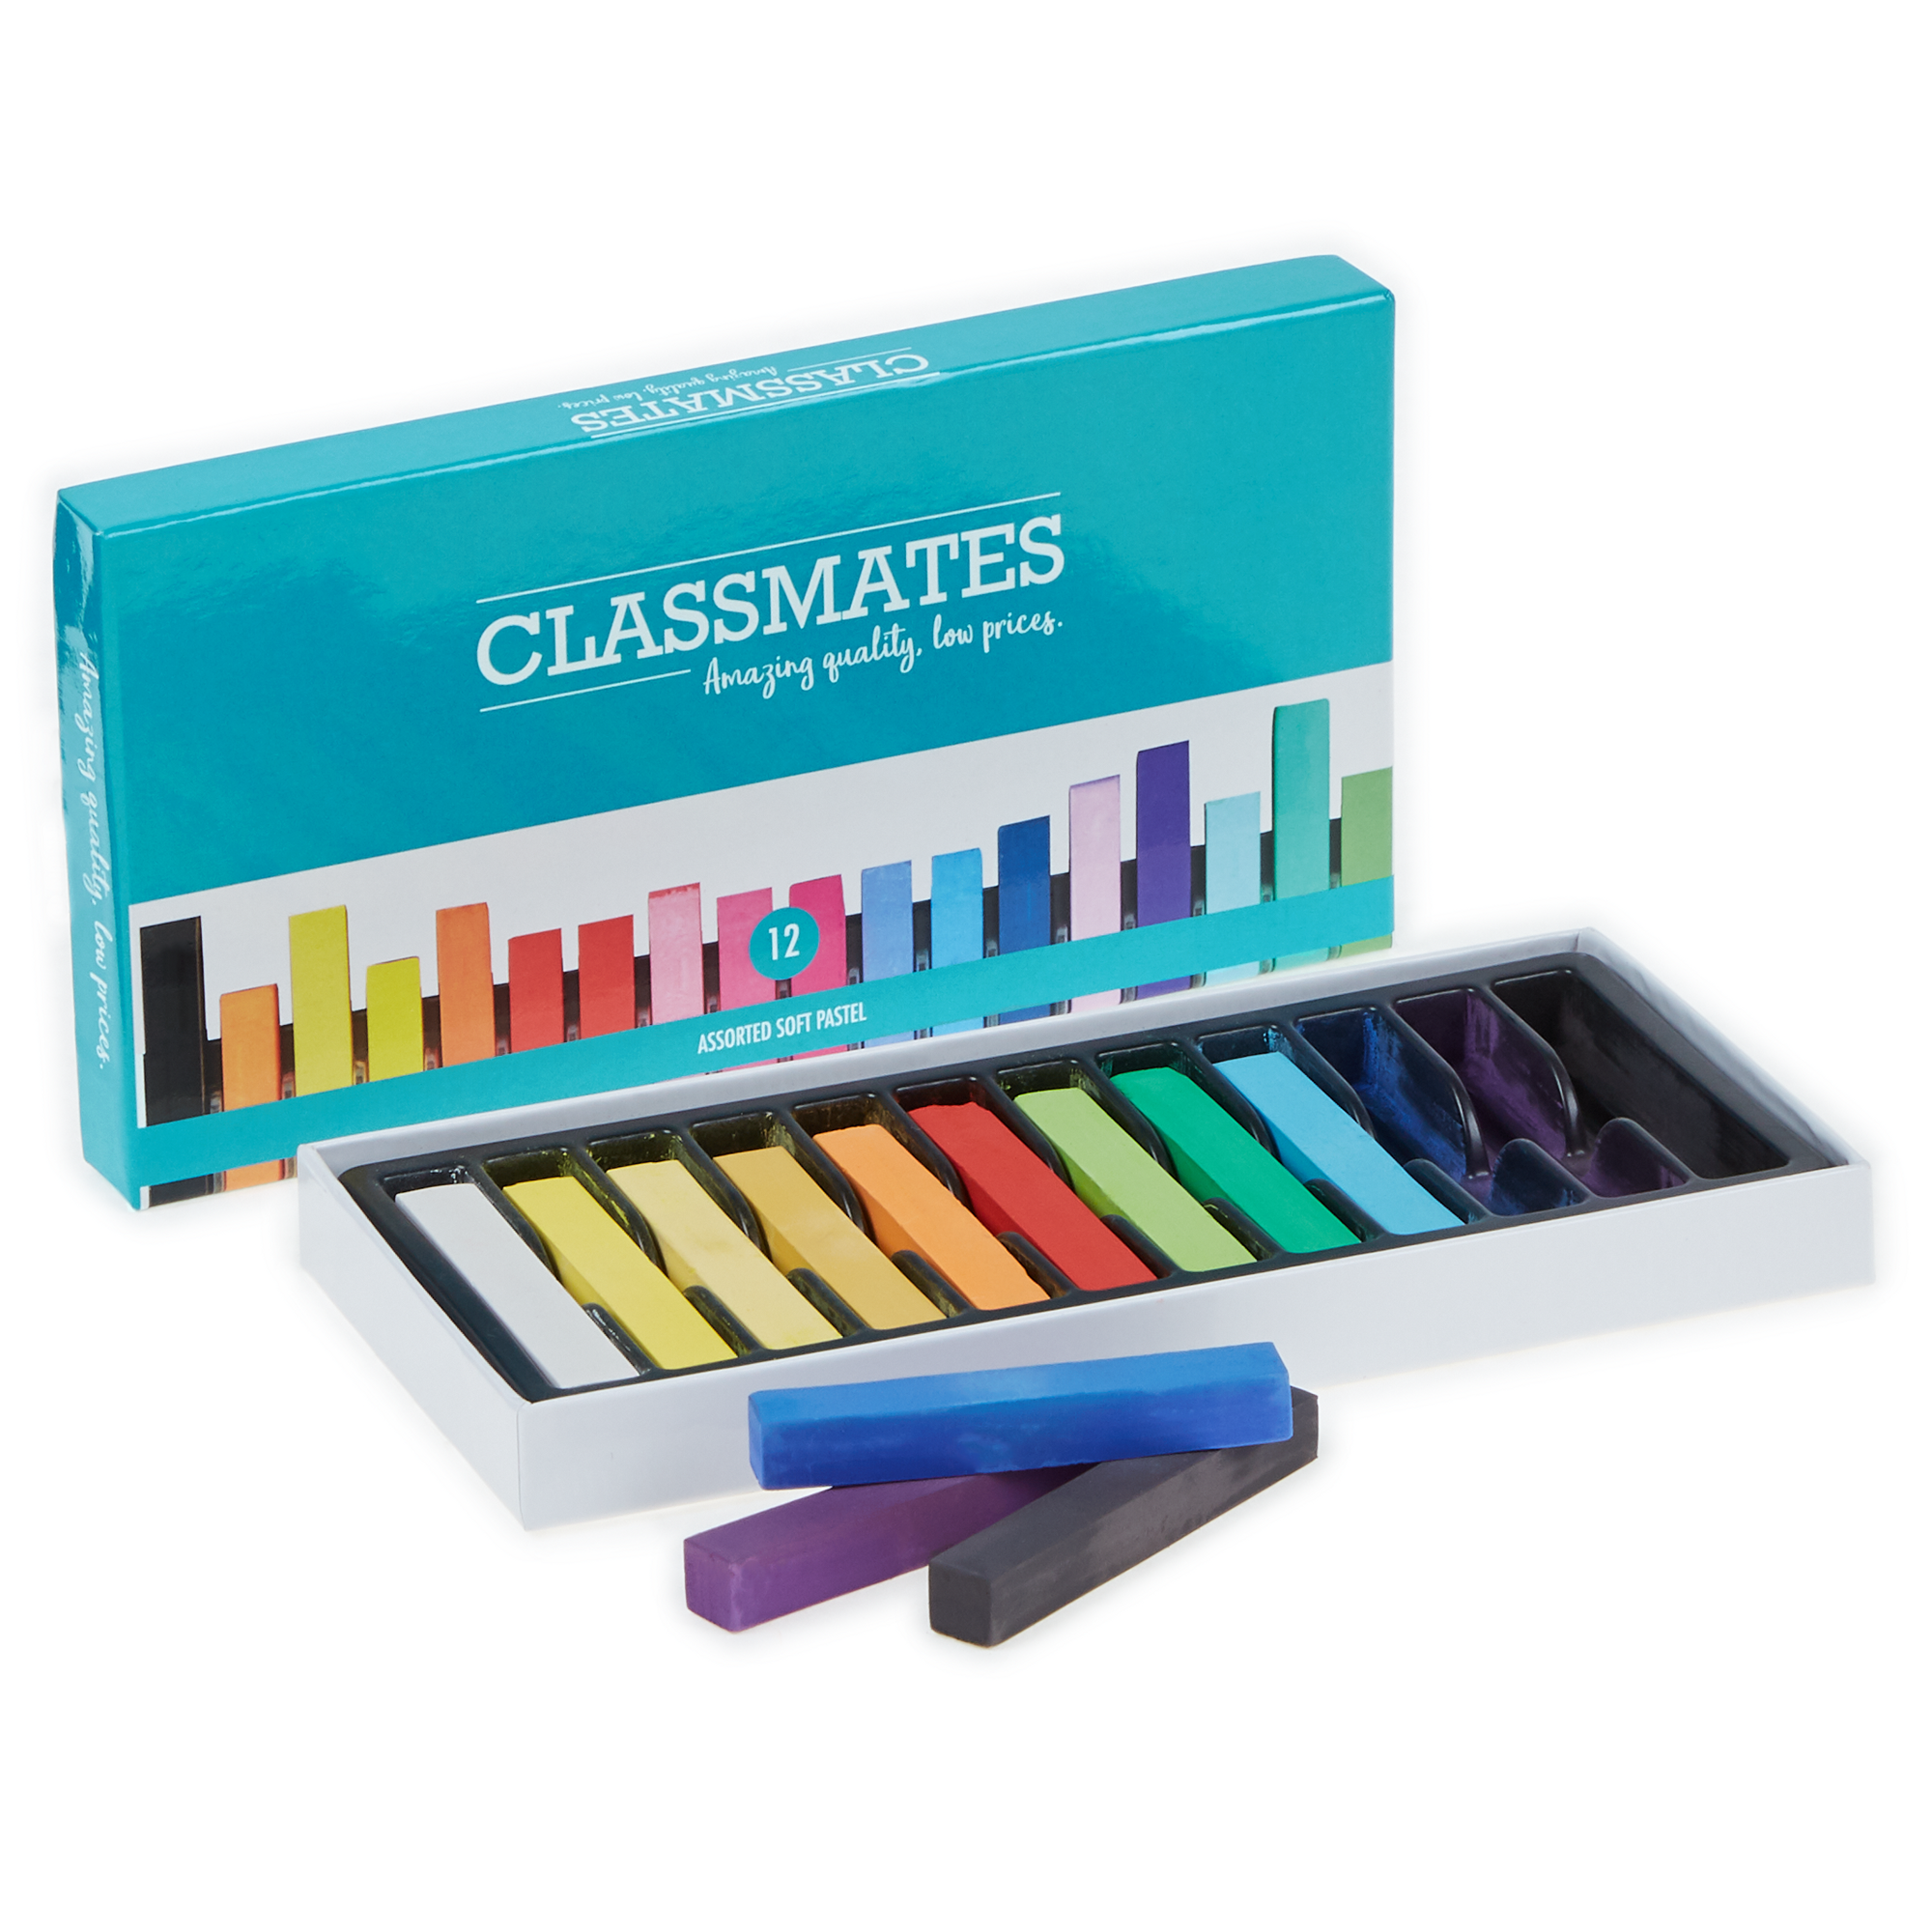 Chalk Pastels 12 Box 12 Pack